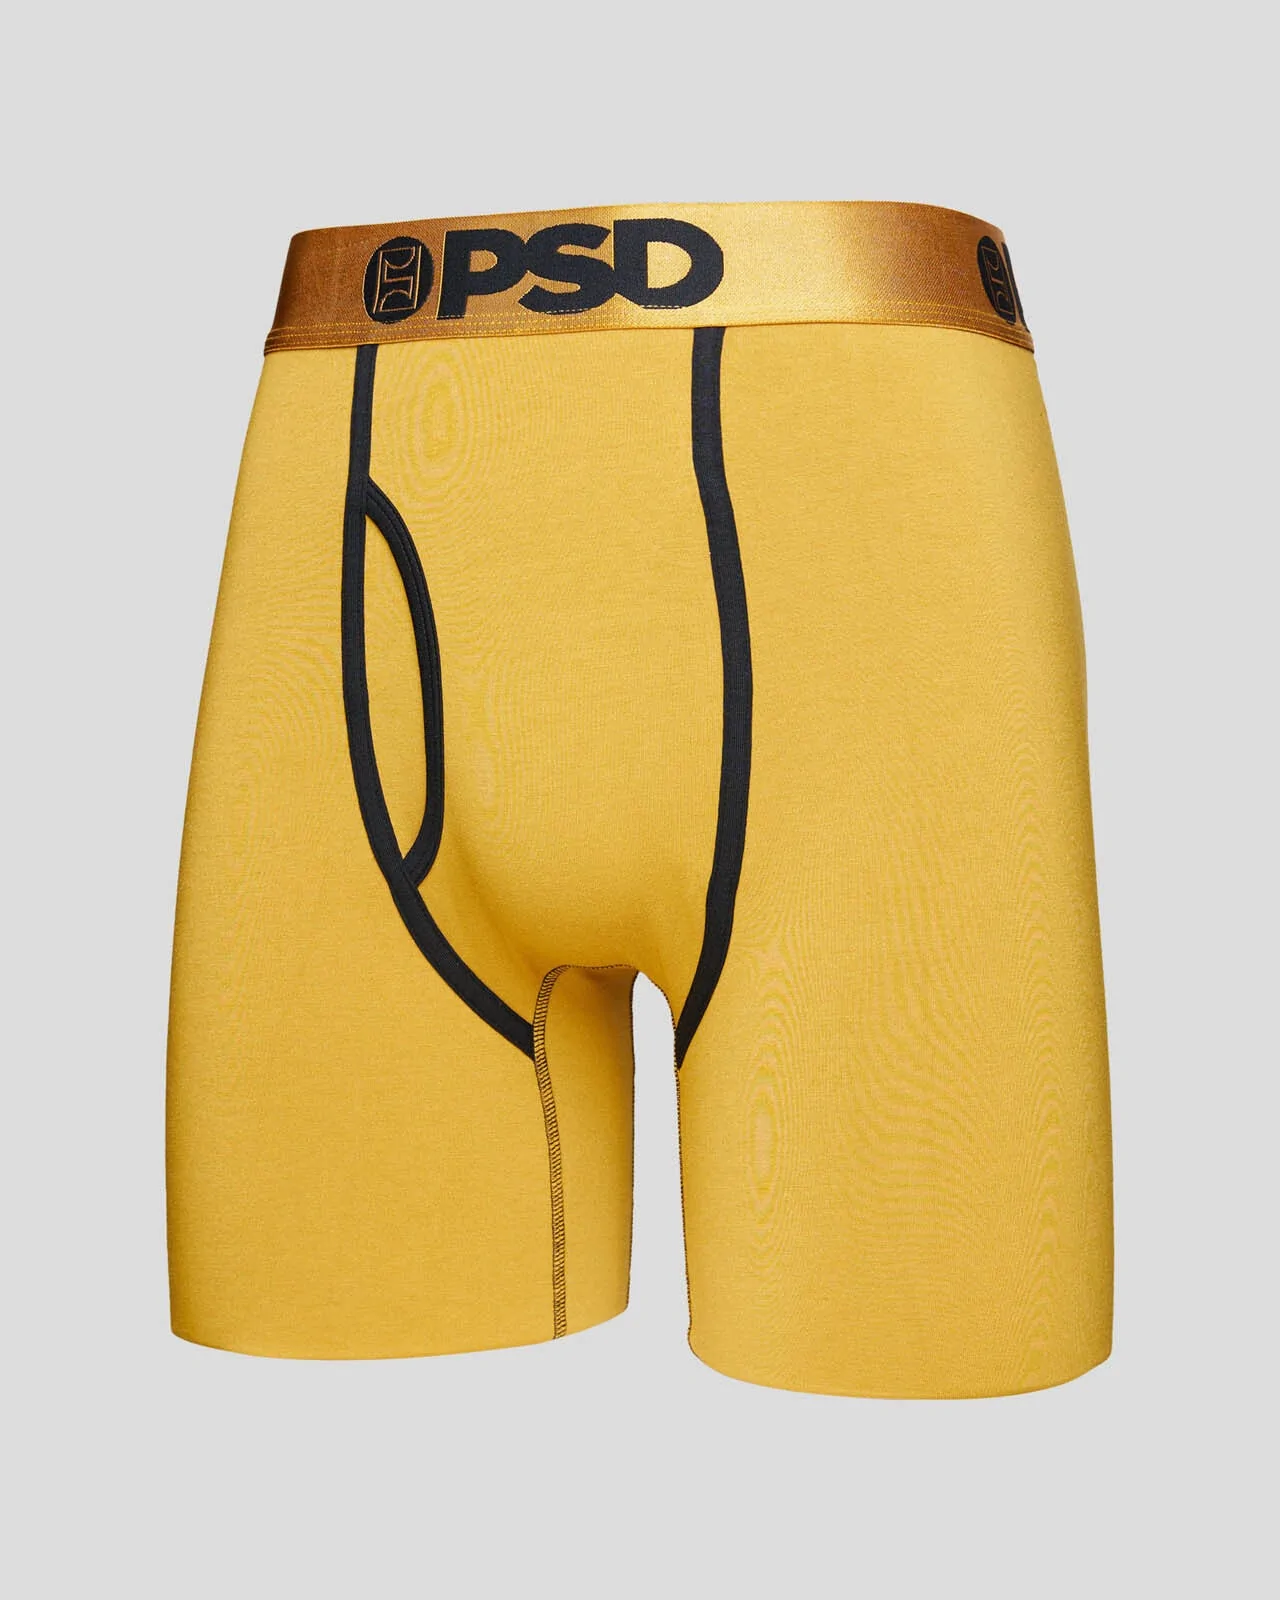 MODAL 3 PACK - Dot Lux - PSD Underwear